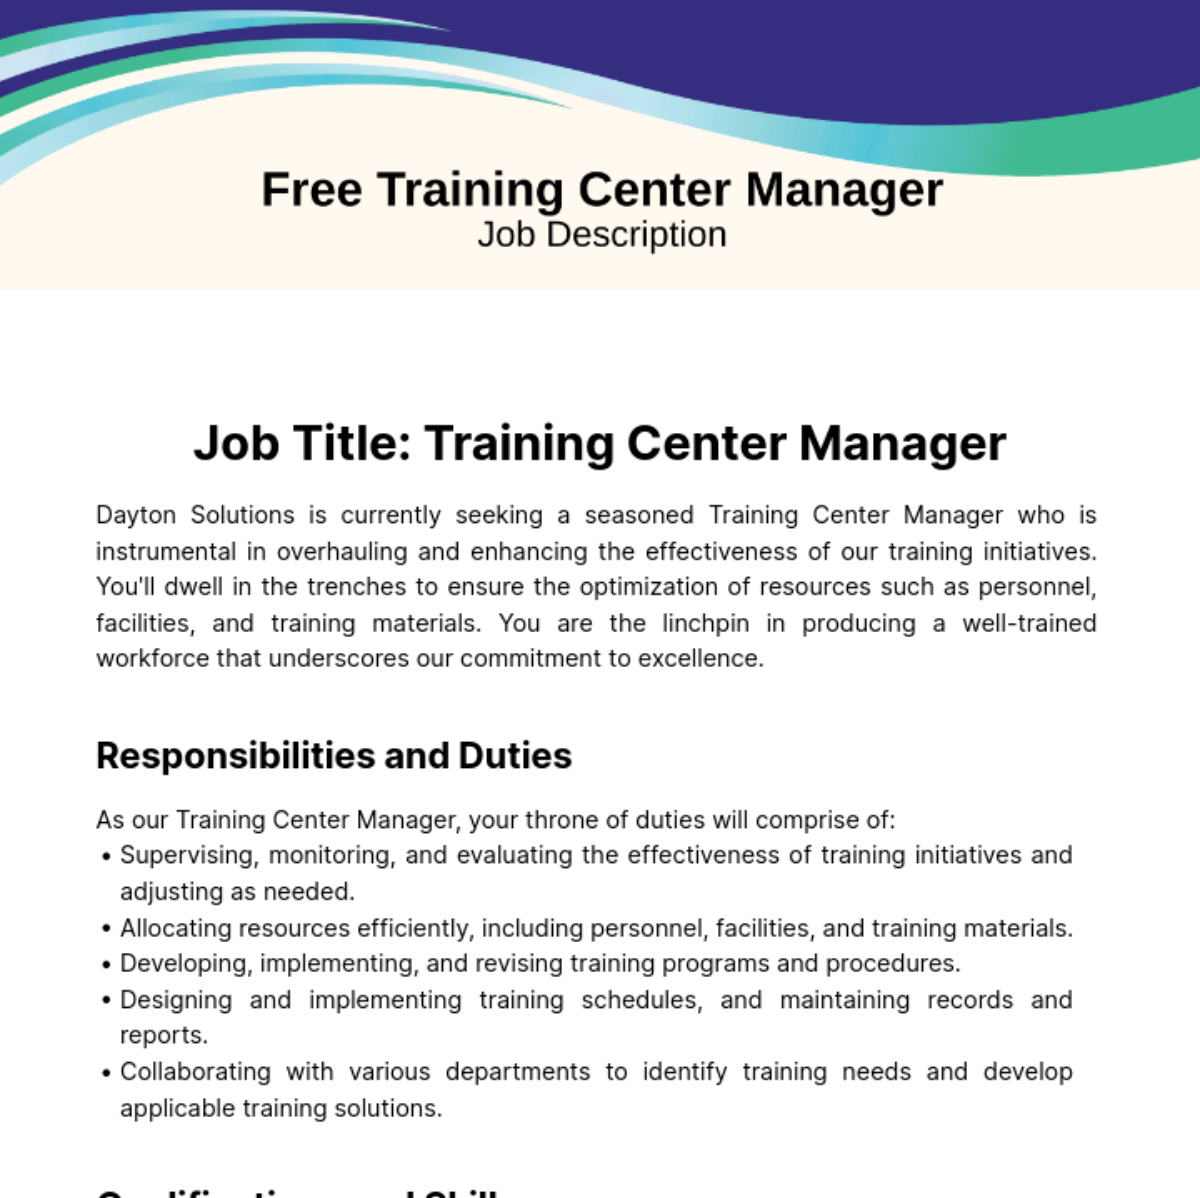 Free Training Center Manager Job Description Template